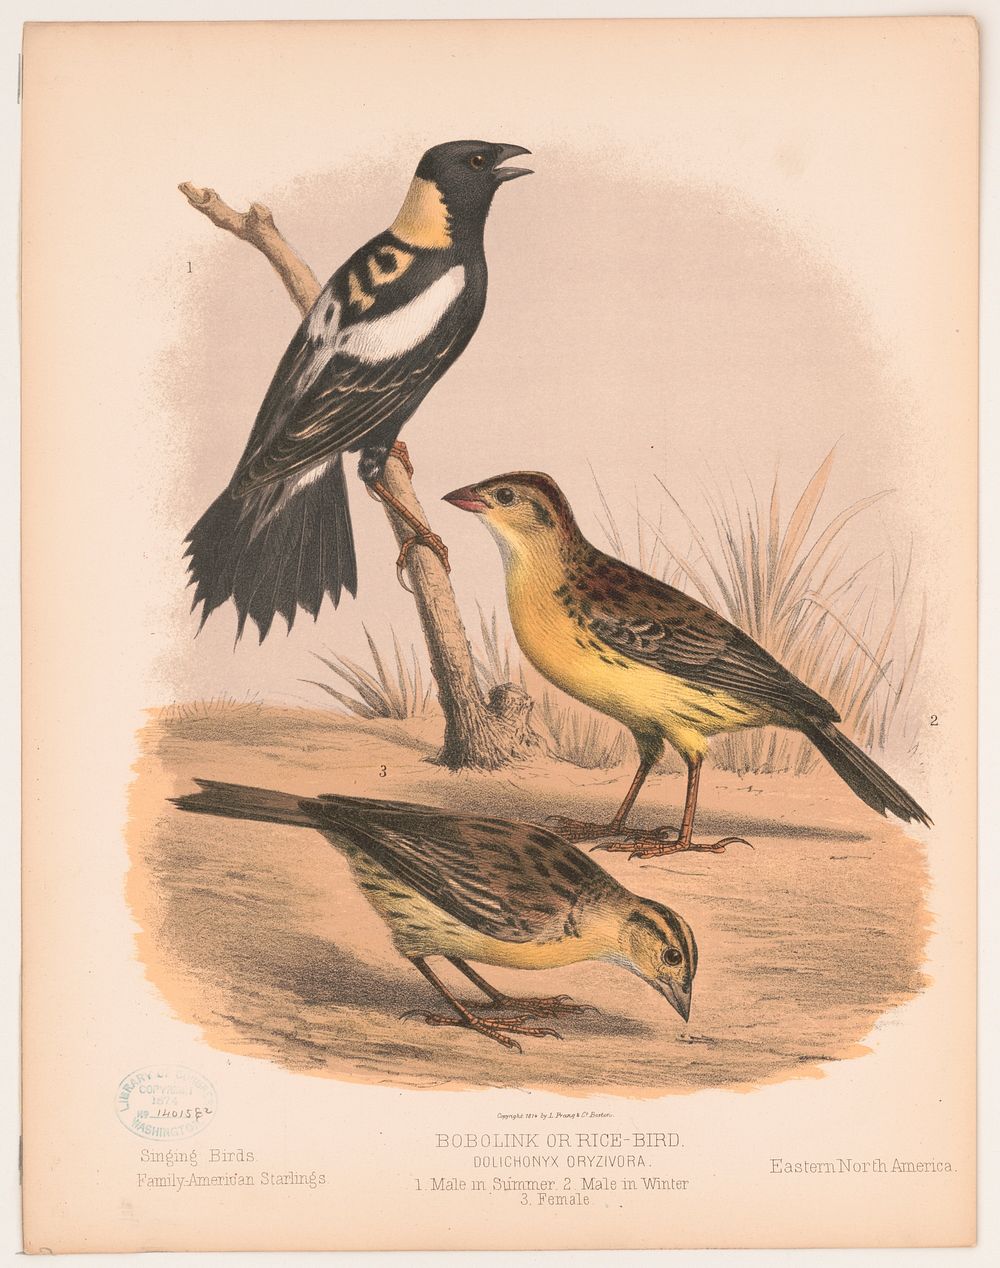 Bobolink or Rice-bird. Dolichonyx oryzivora. 1. Male in summer. 2. Male in winter. 3. Female, L. Prang & Co., publisher